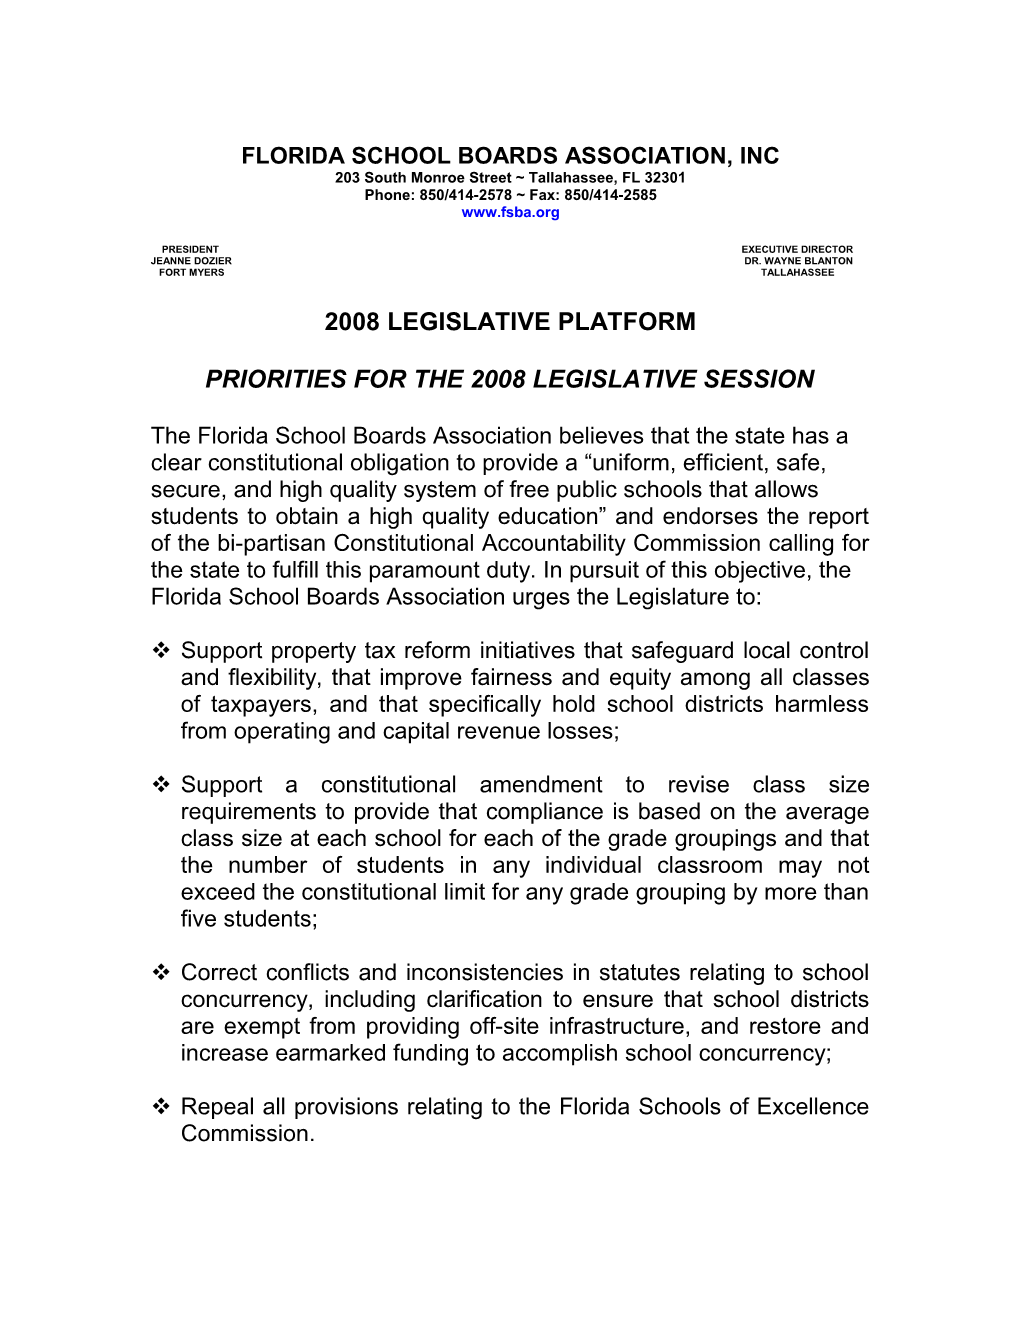 Florida School Boards Association, Inc